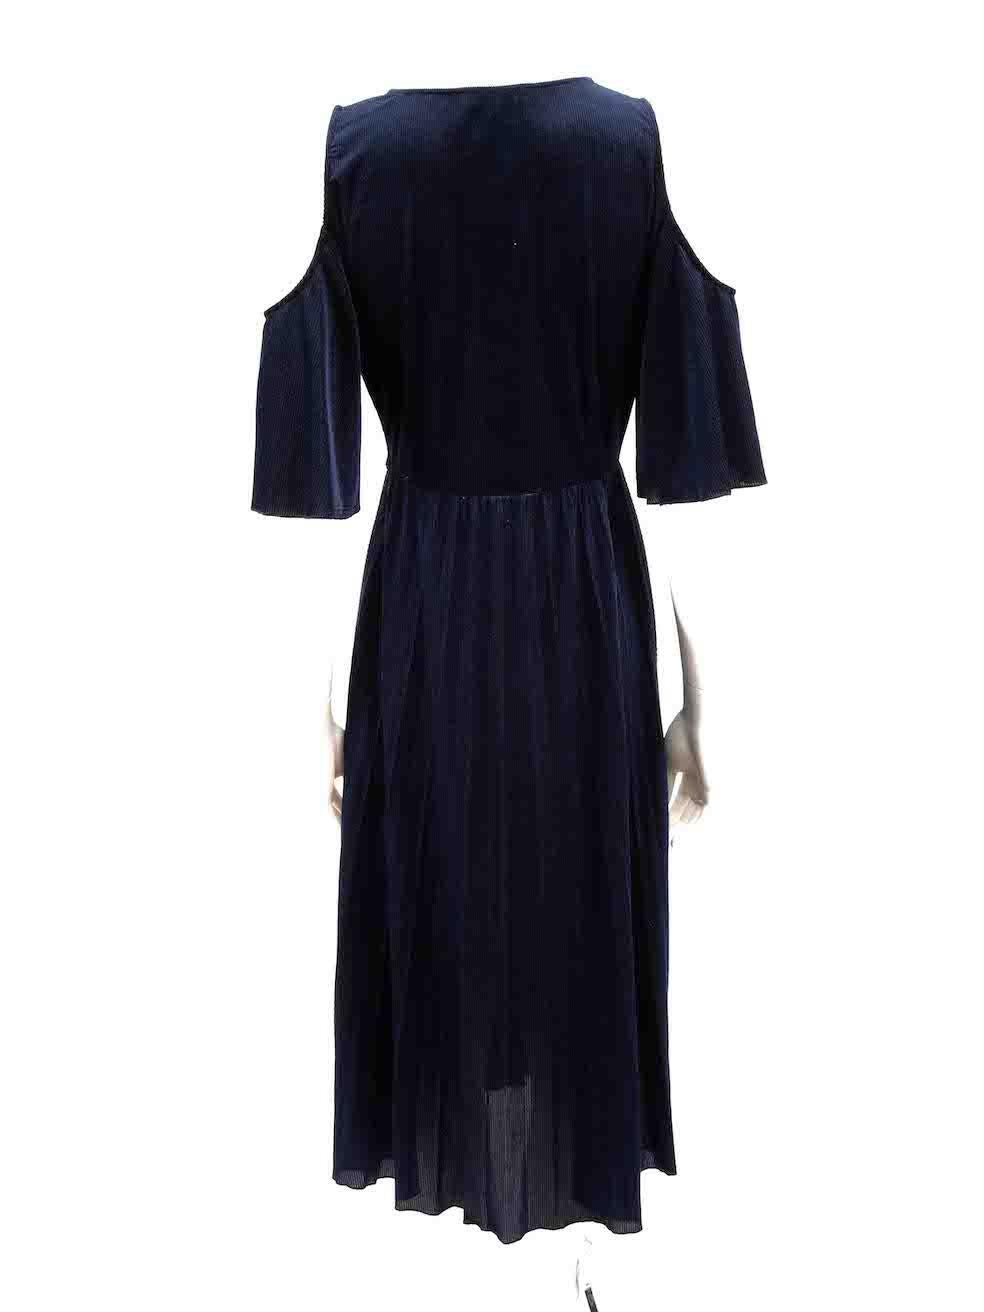 Maje - Robe midi plissée en velours côtelé - Bleu marine - Taille M Neuf - En vente à London, GB